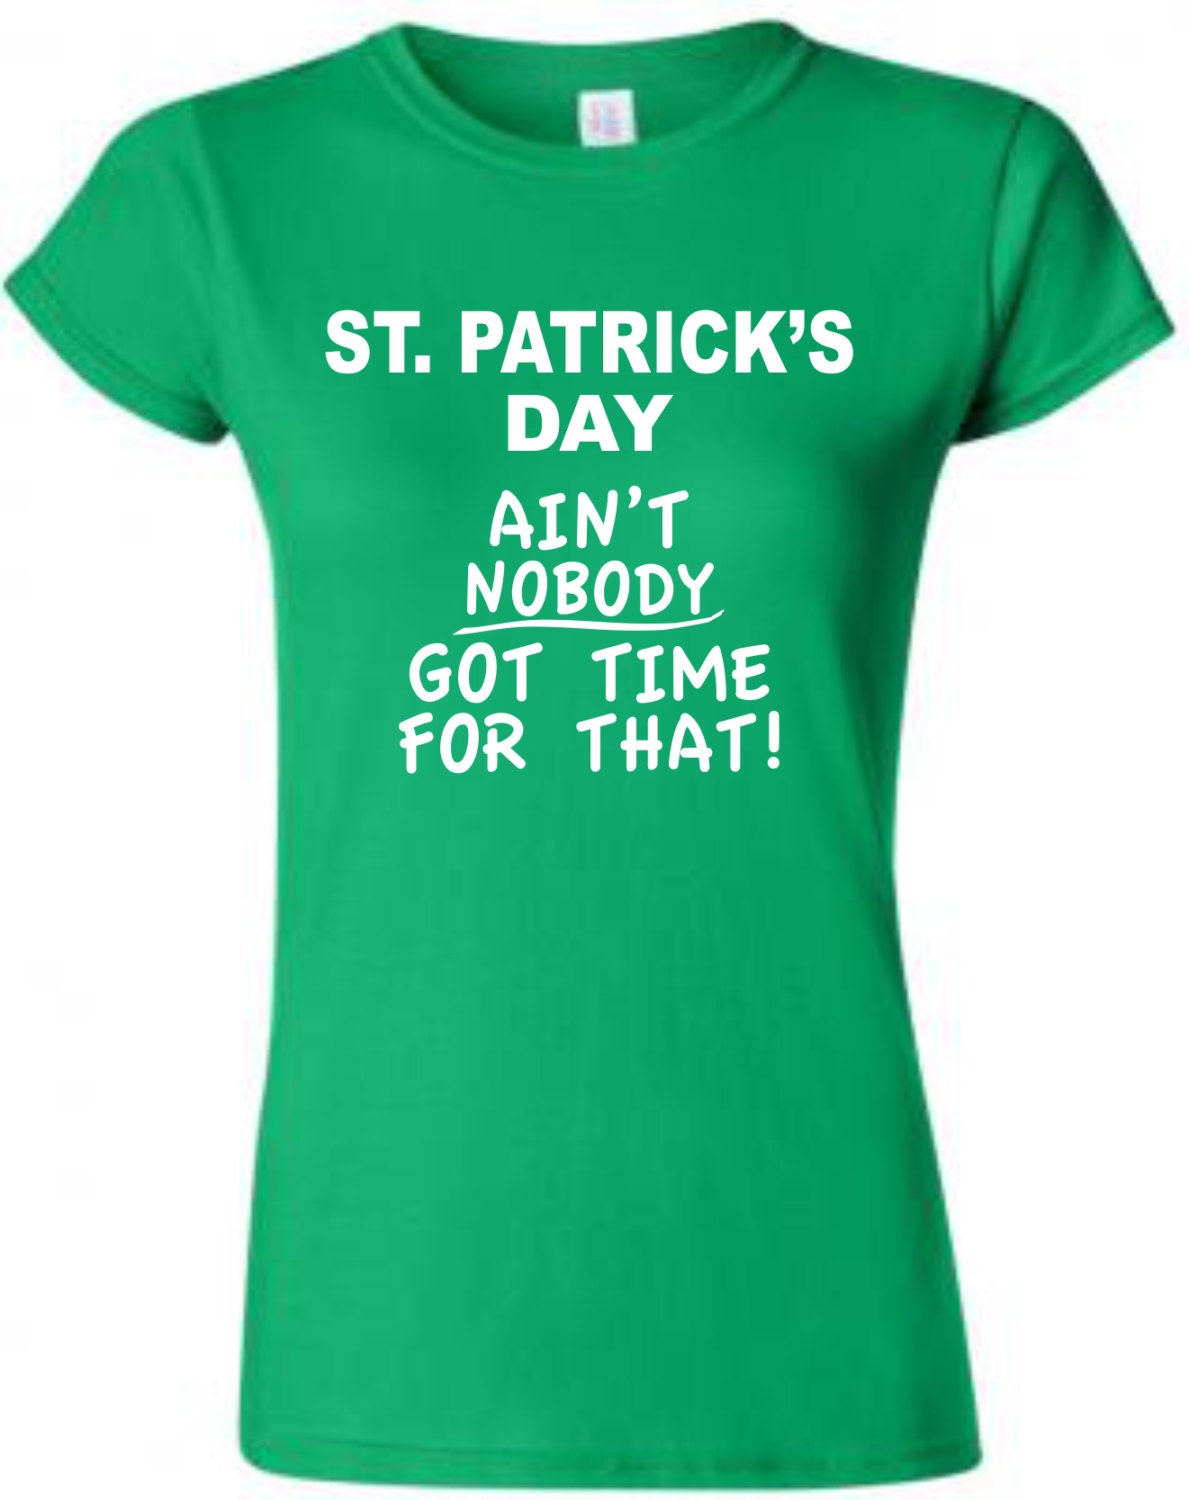 ST. PATRICK'S Day Shirt Womens T Shirt Aint by TheGiftPiglet